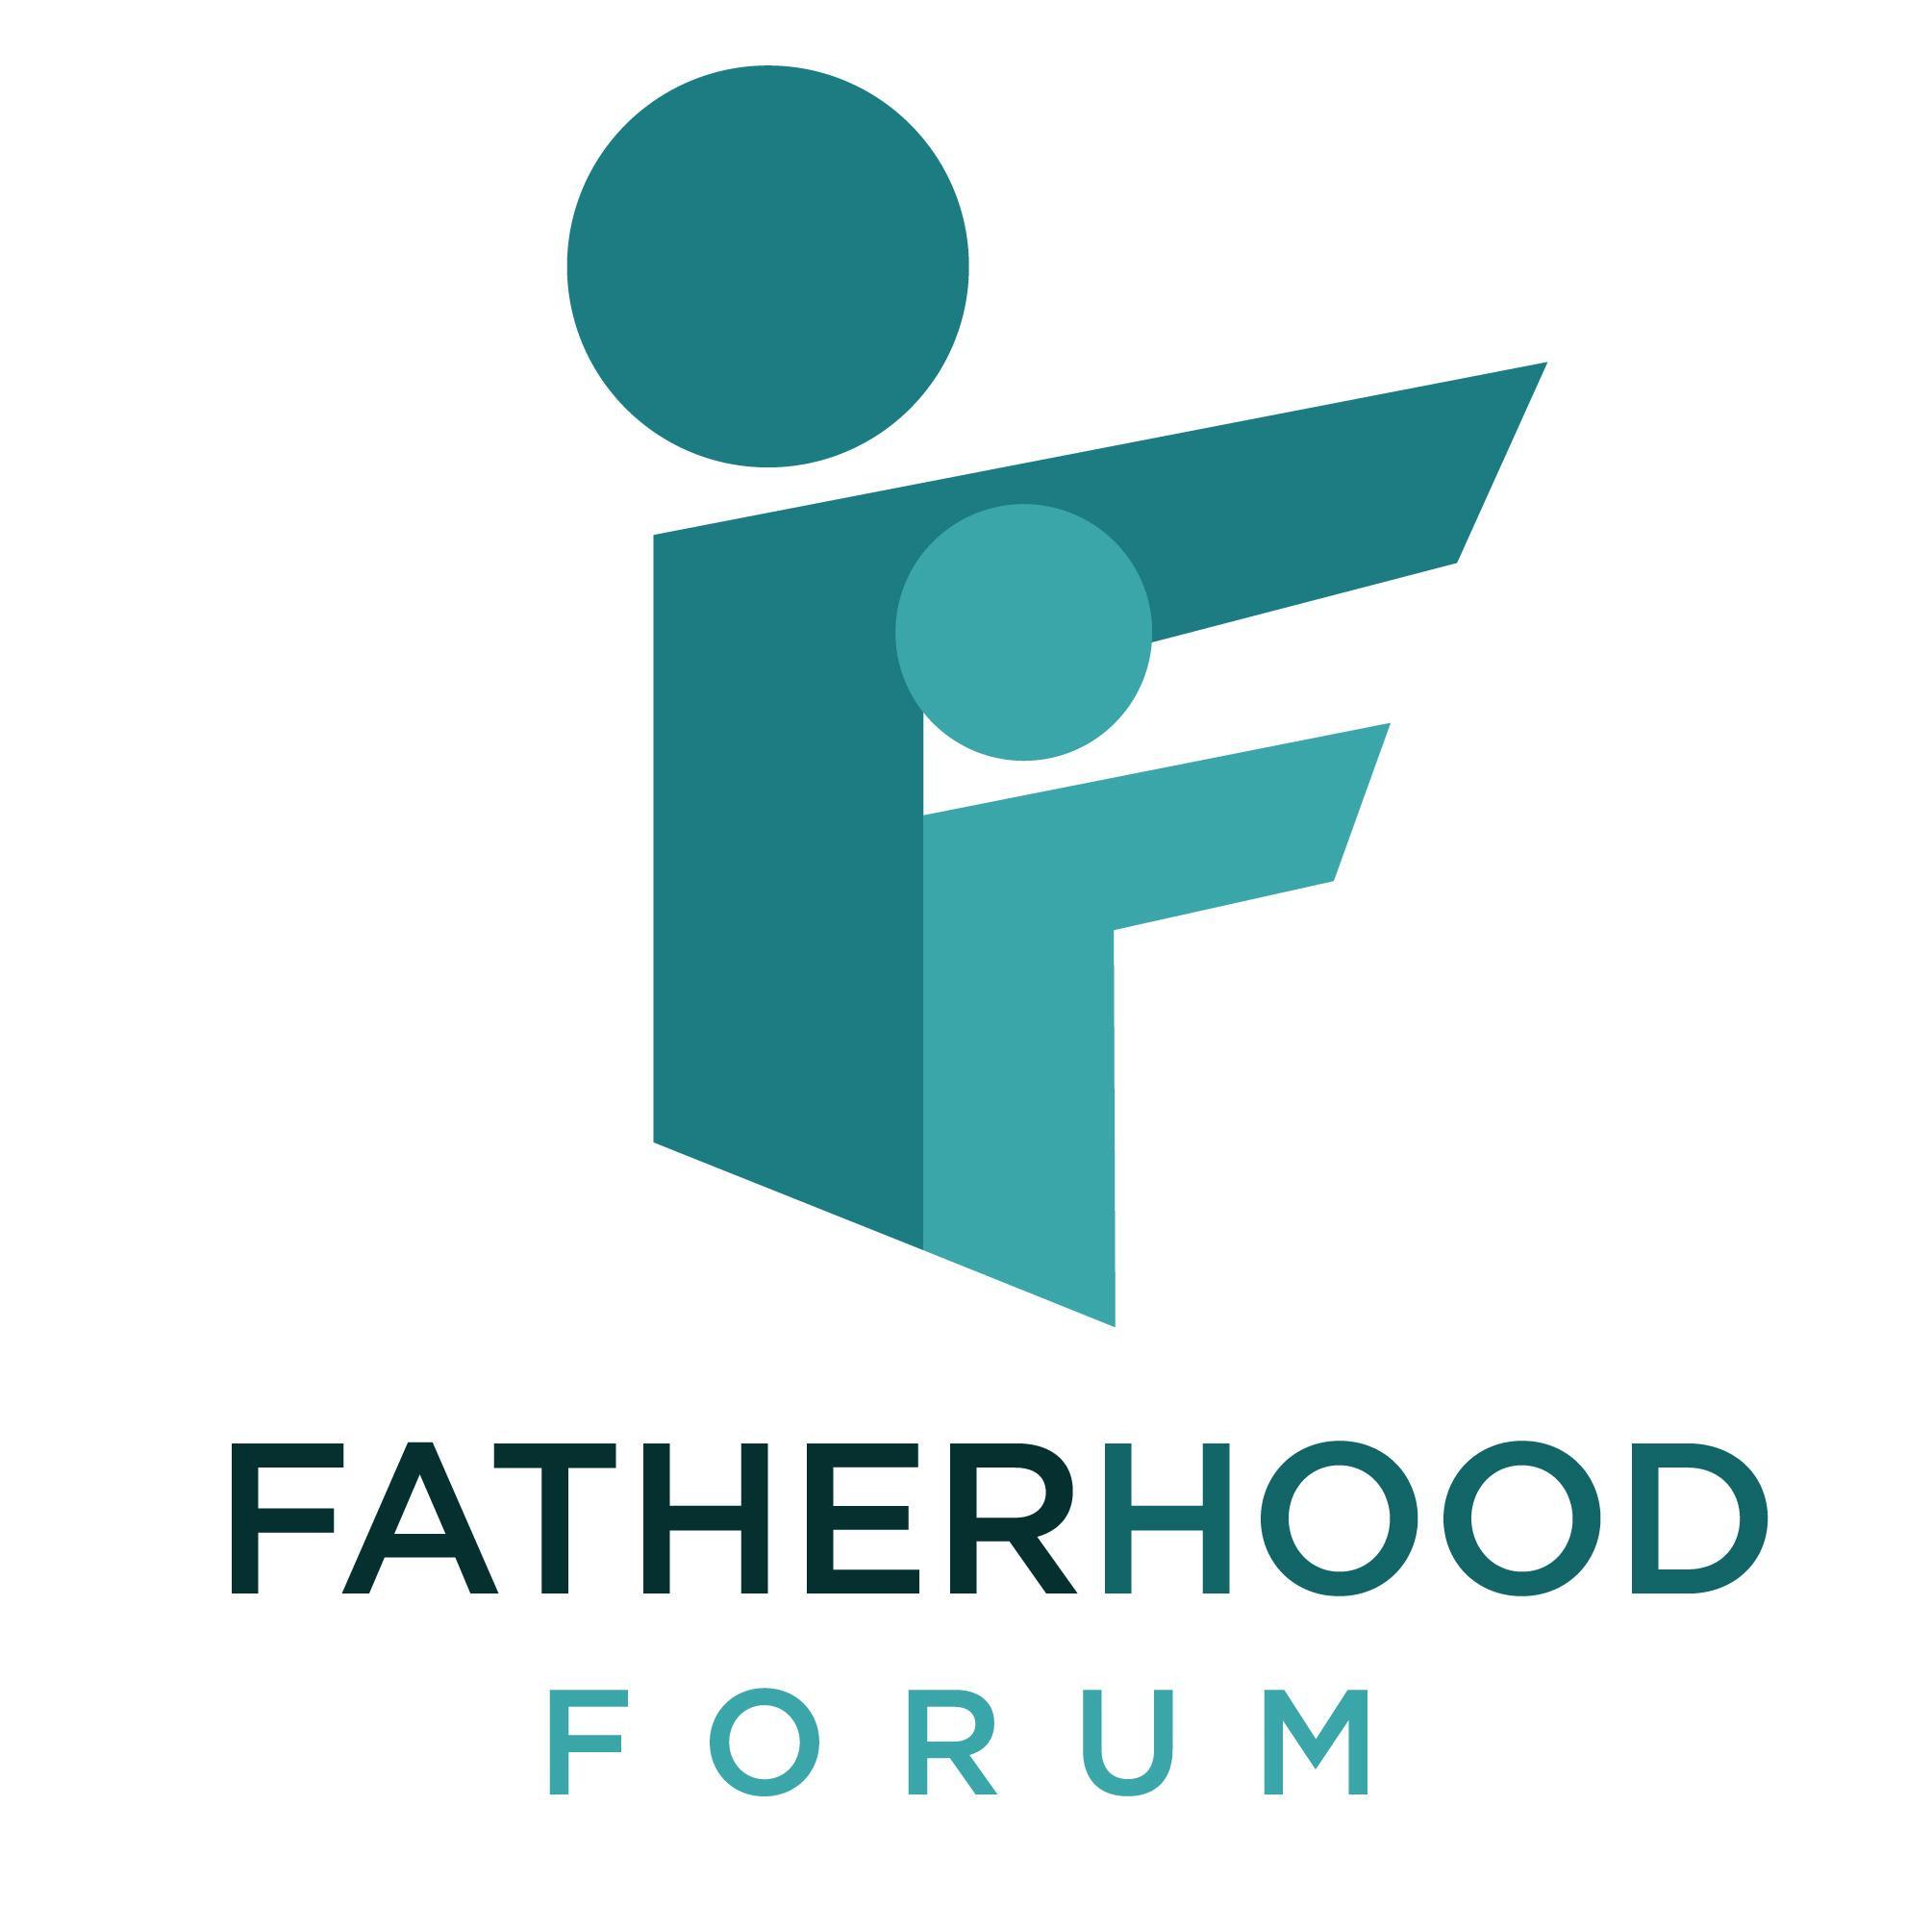 Fatherhood : Prime Leadership ||
Powered by SEMAI 2045